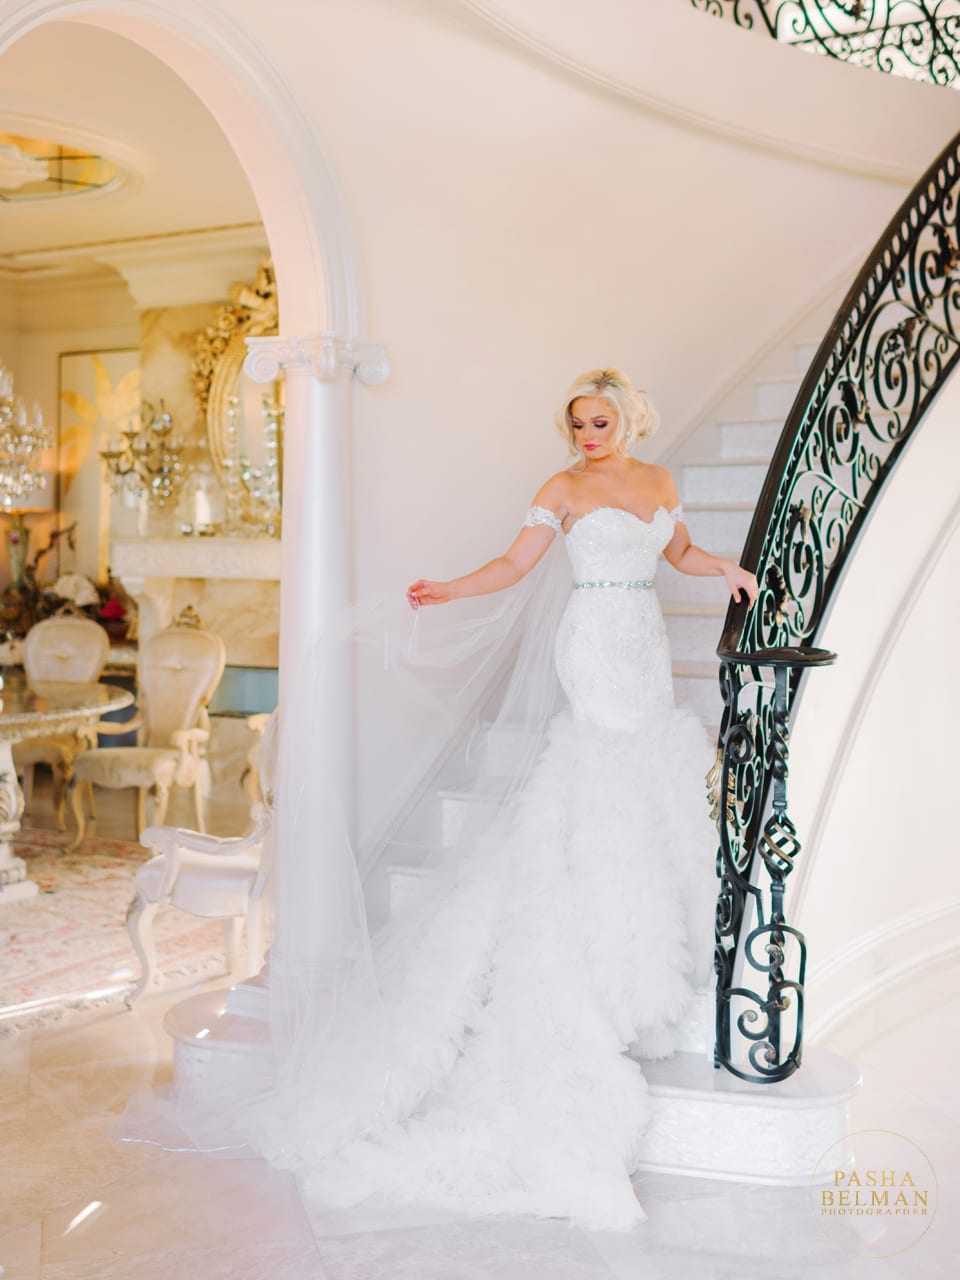 Charleston Wedding Photographer Pasha Belman - Bridal Wedding Portraits in South Carolina